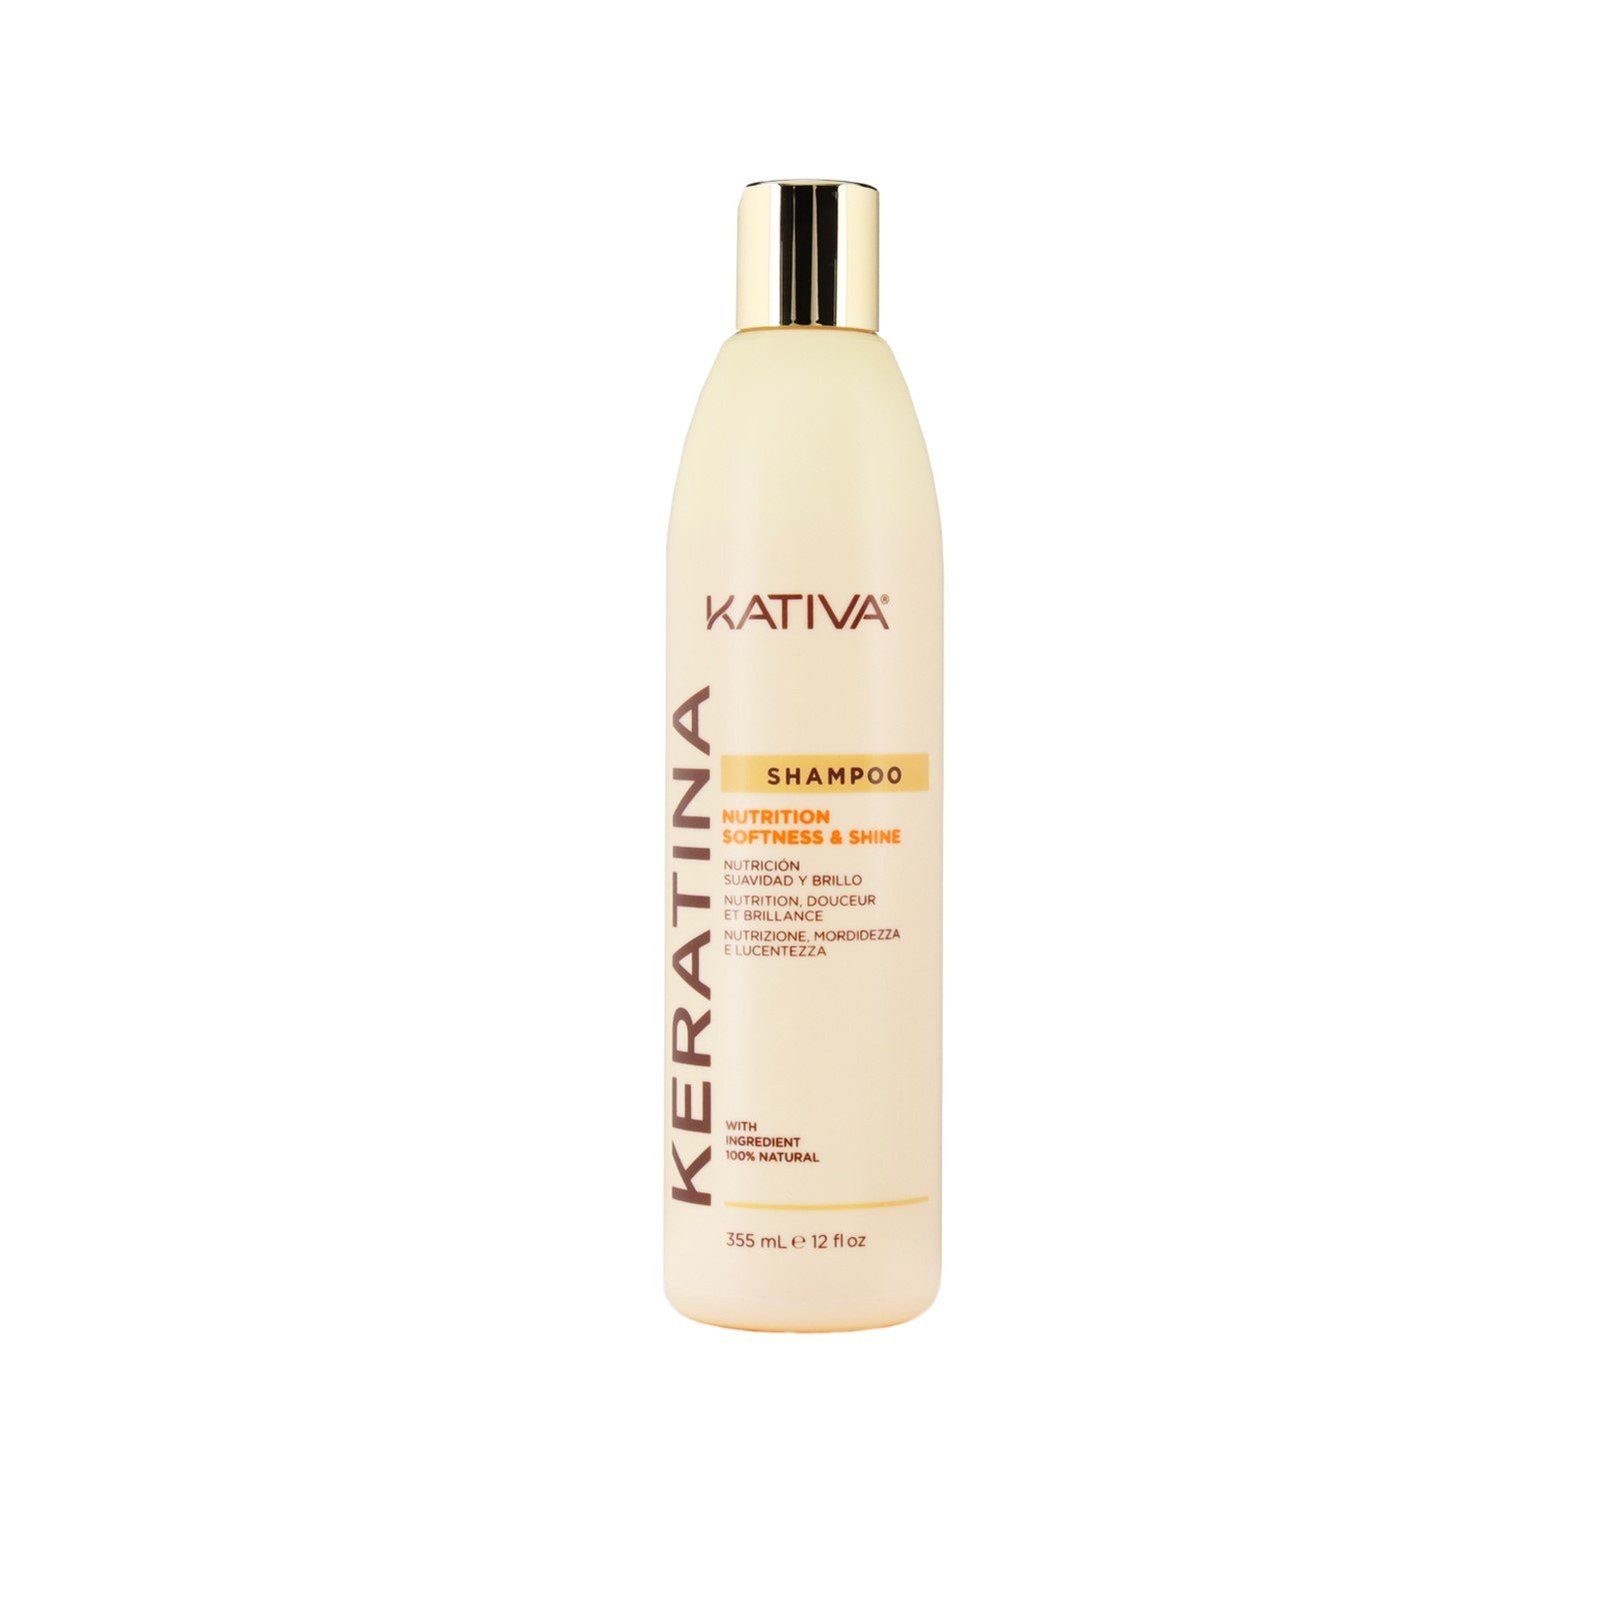 Kativa Keratin Nutrition Softness & Shine Shampoo 355ml (12 fl oz)